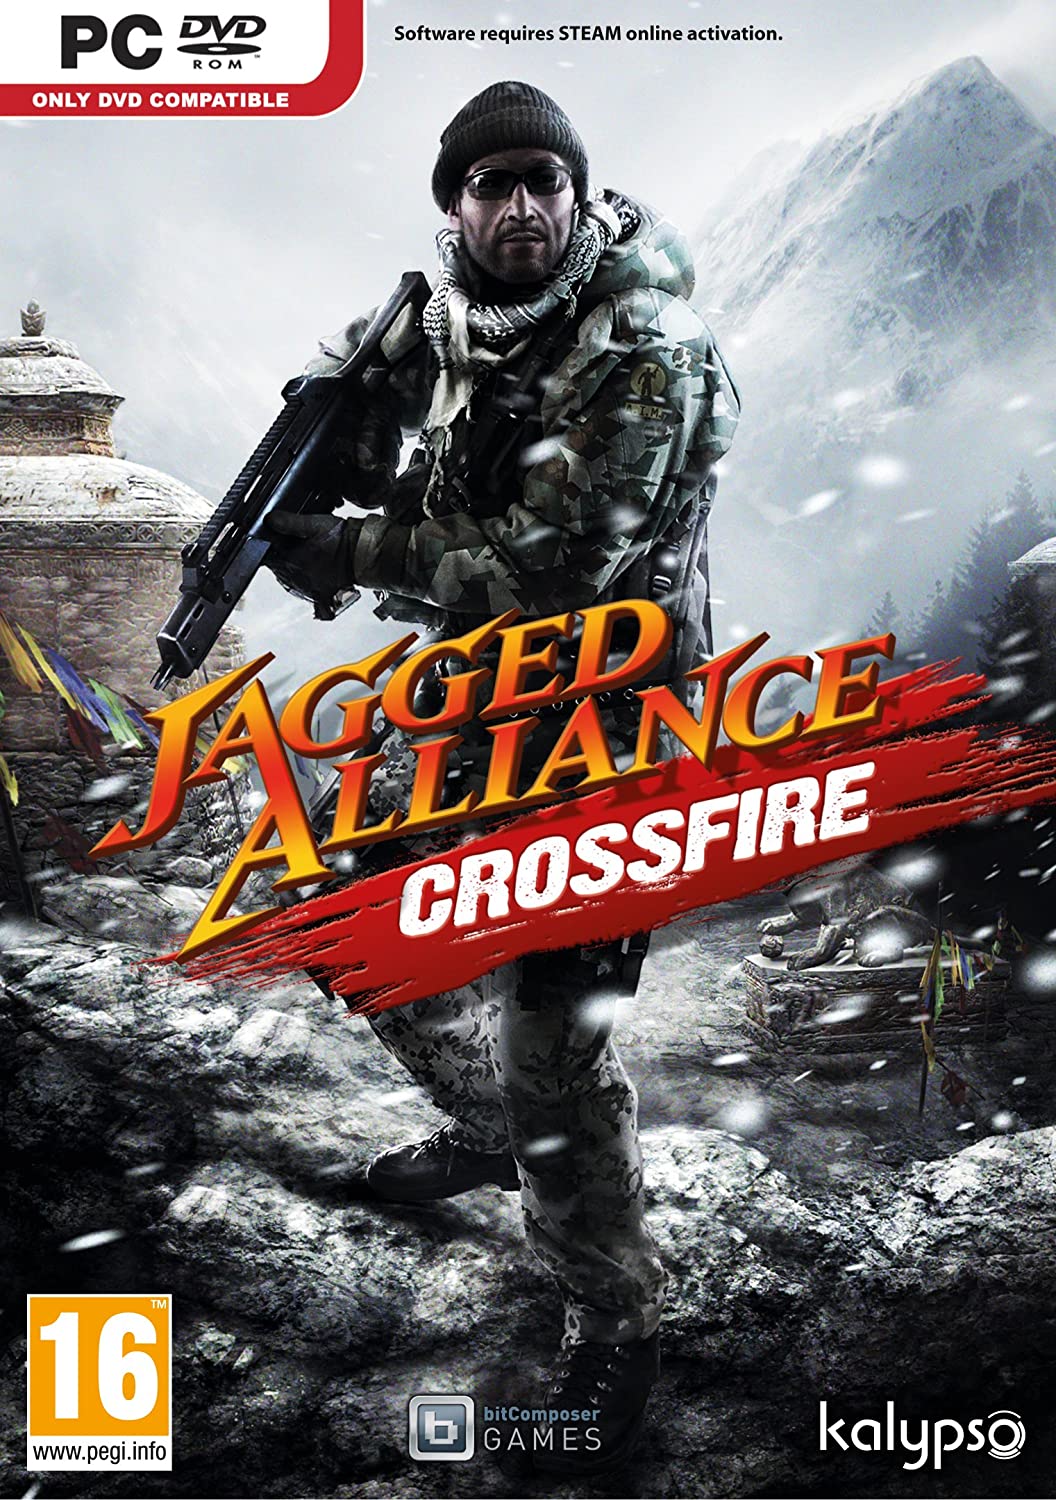 Jagged Alliance - Crossfire (PC DVD)